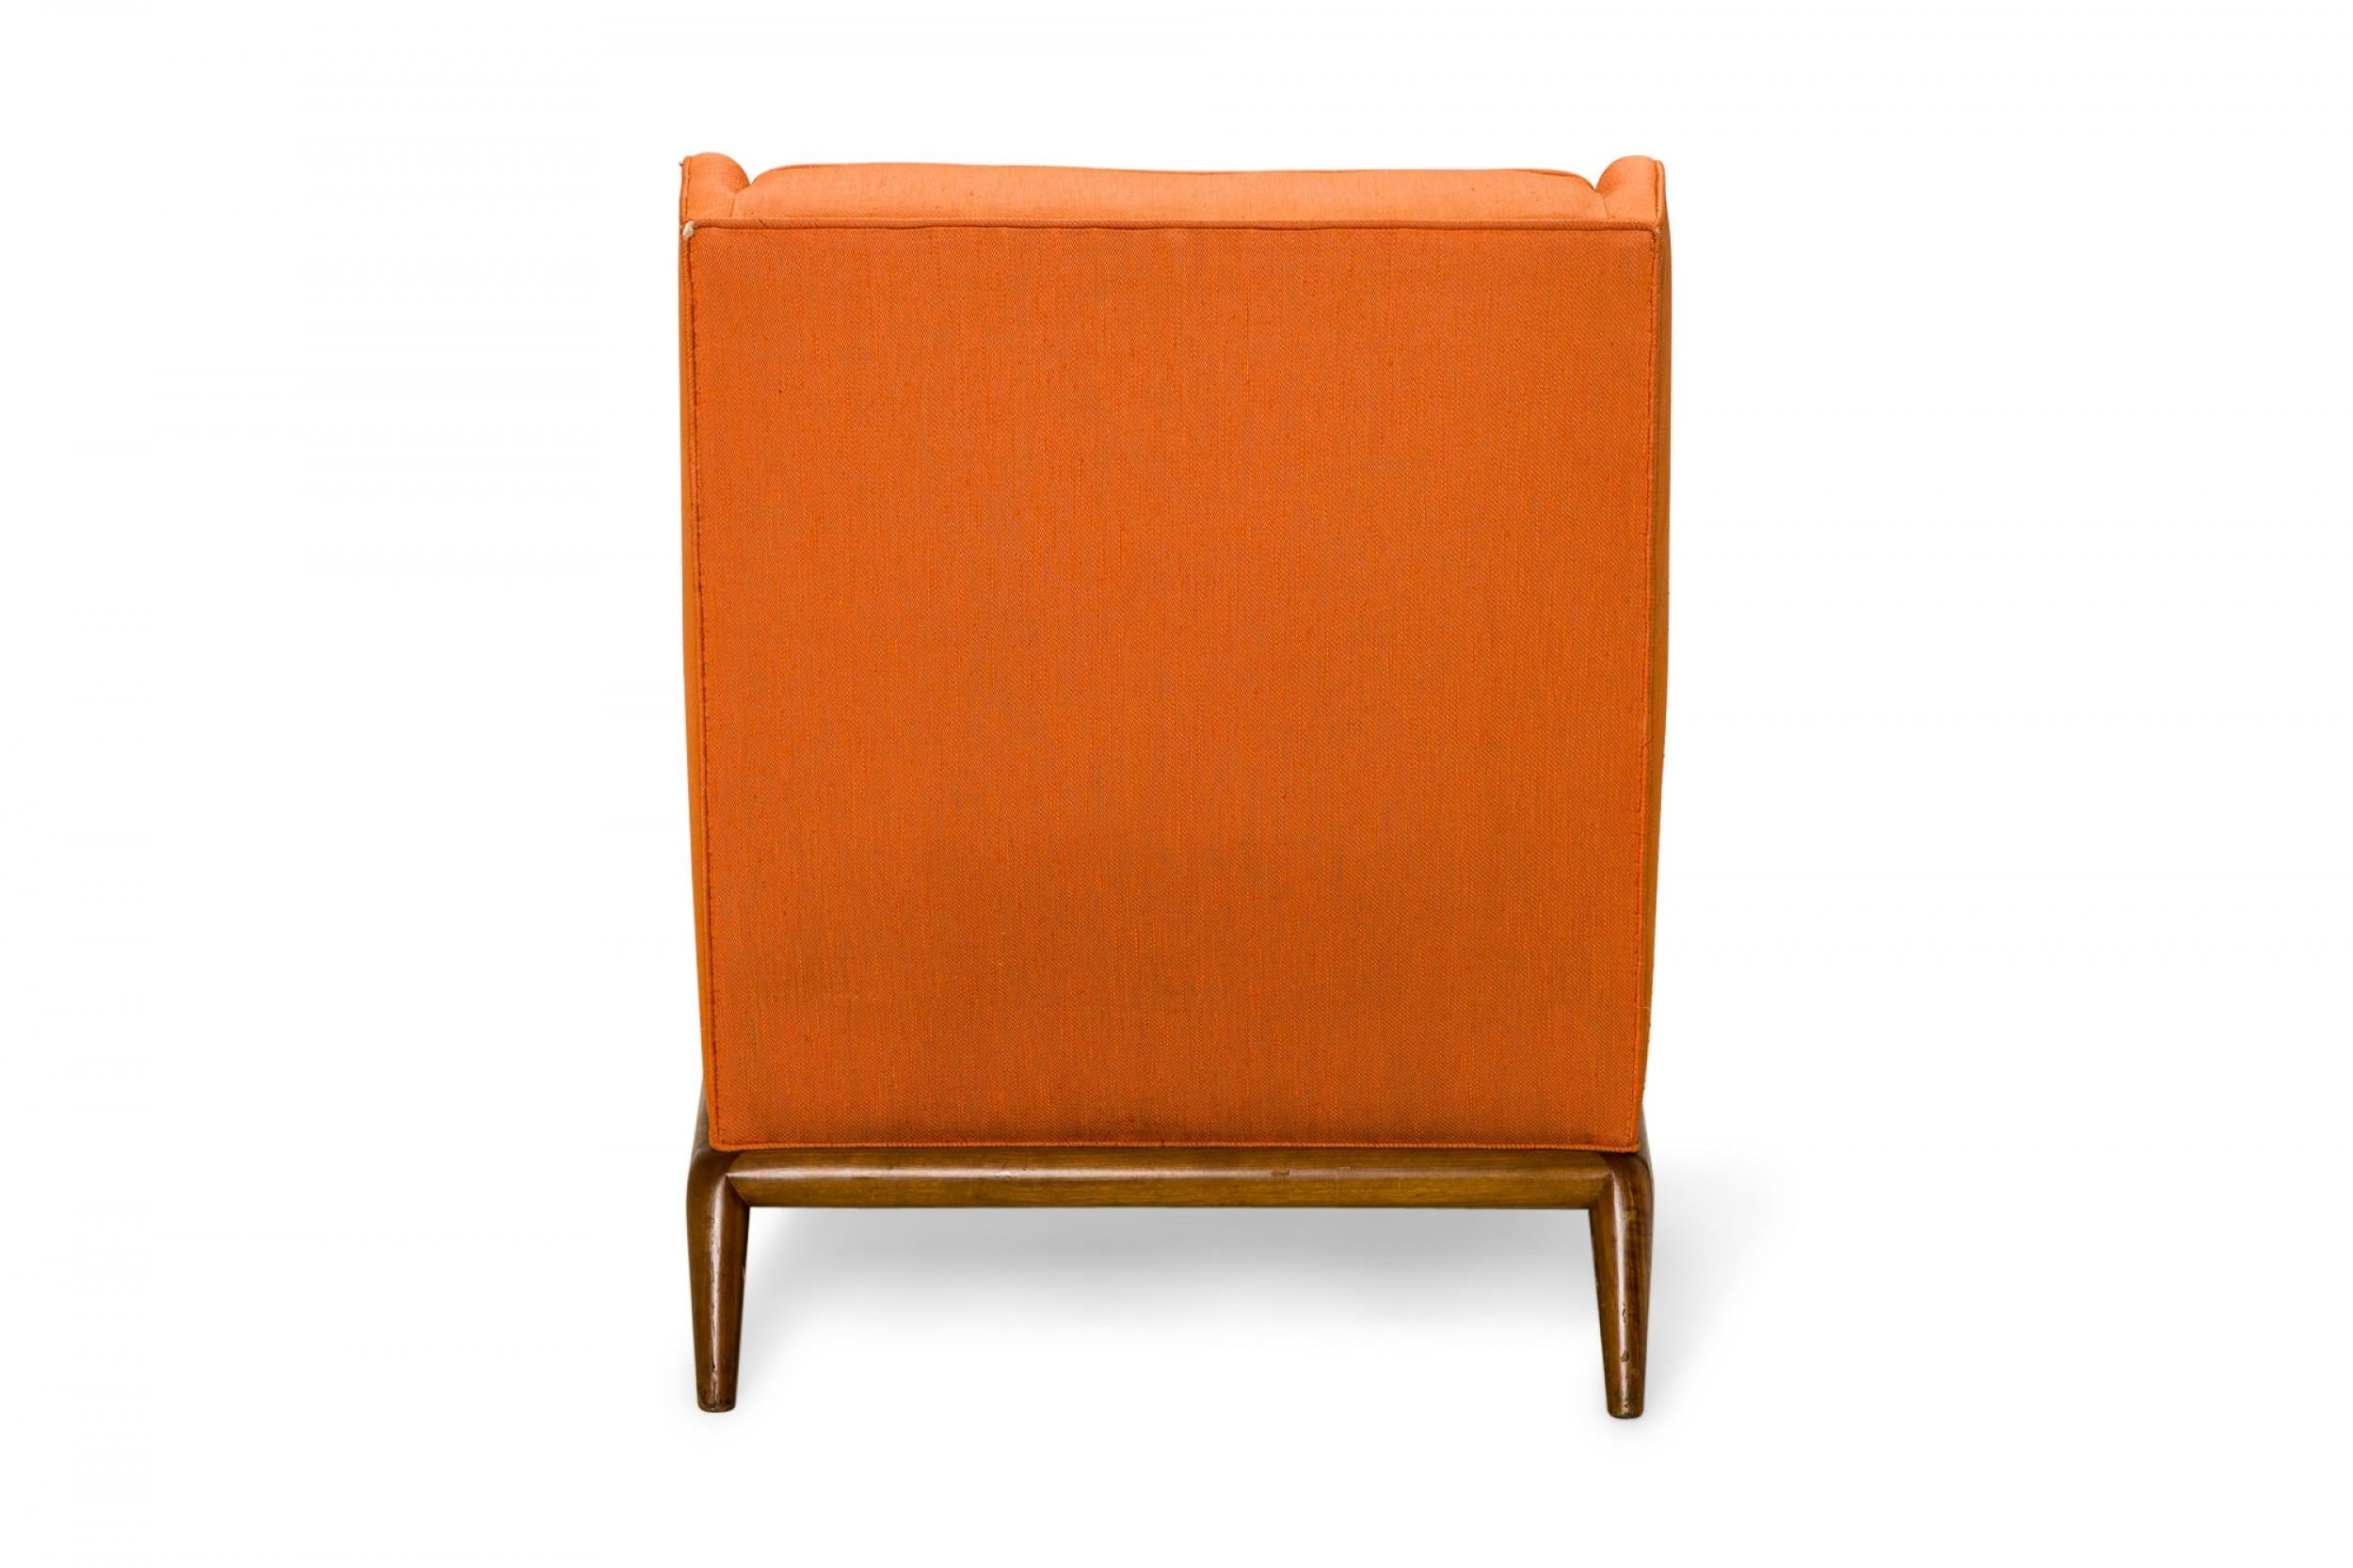 T.H. Robsjohn-Gibbings for Widdicomb High Back Orange Upholstered Lounge Chair In Good Condition For Sale In New York, NY